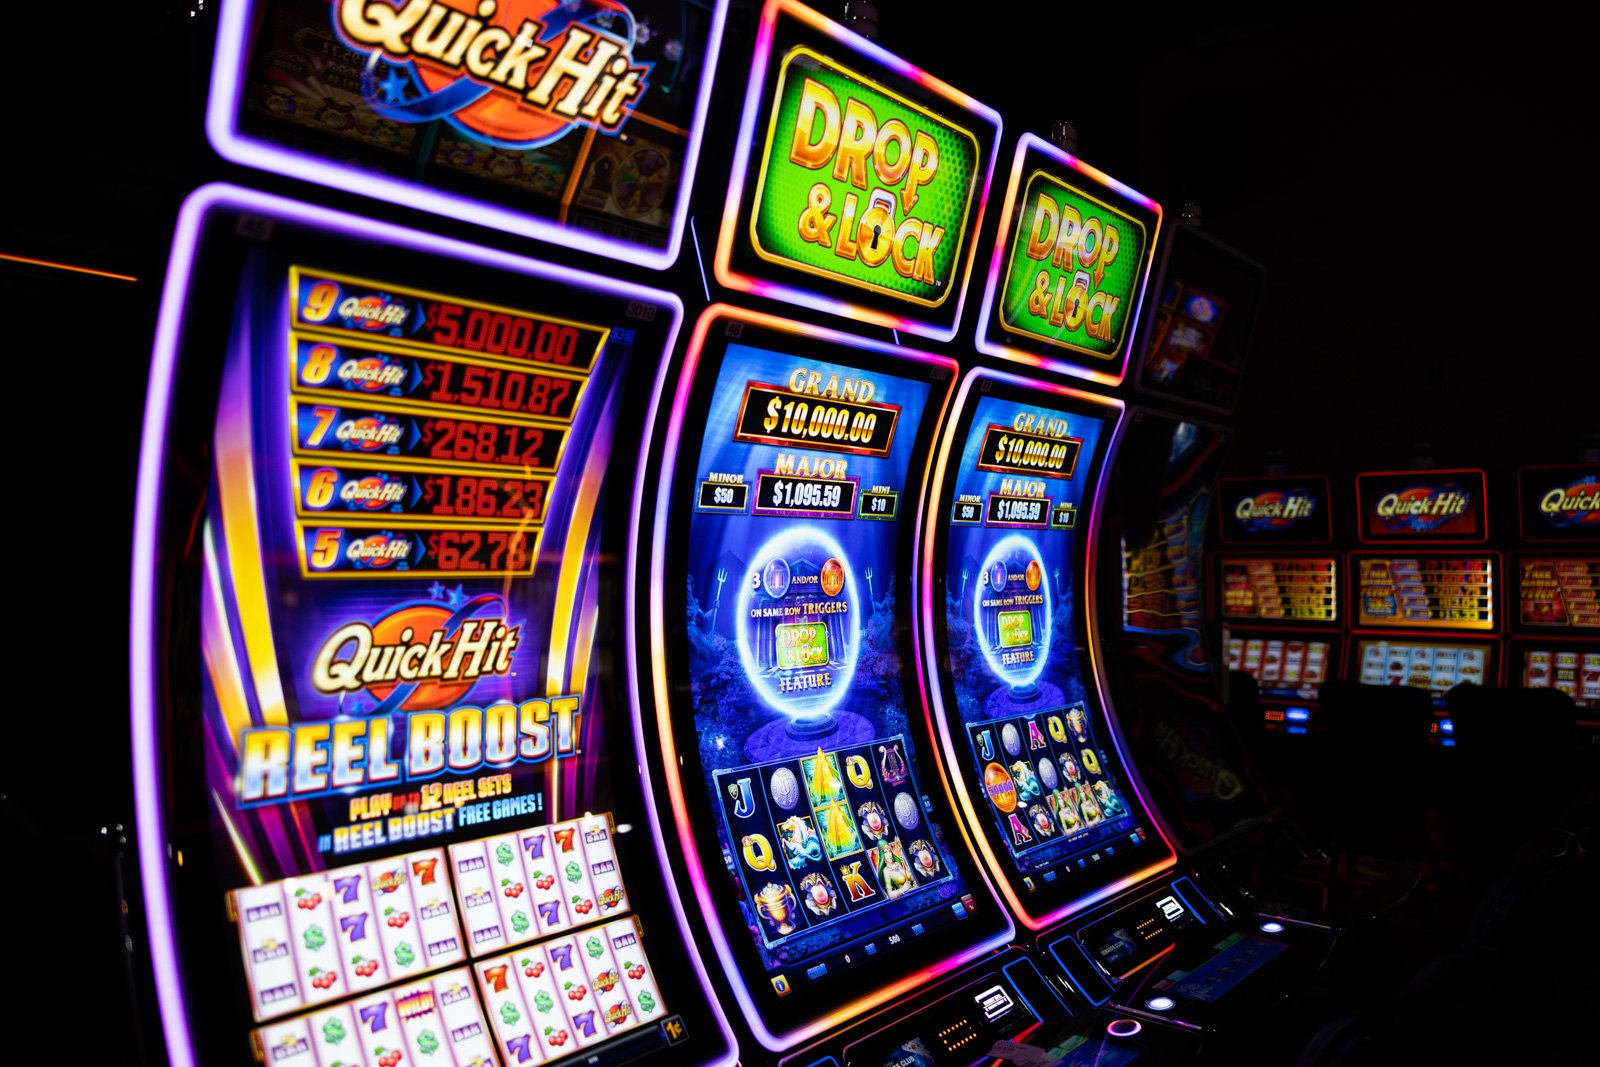 rosebud-casino-gaming-floor-slot-machines-near-valentine-nebraska-9.jpg